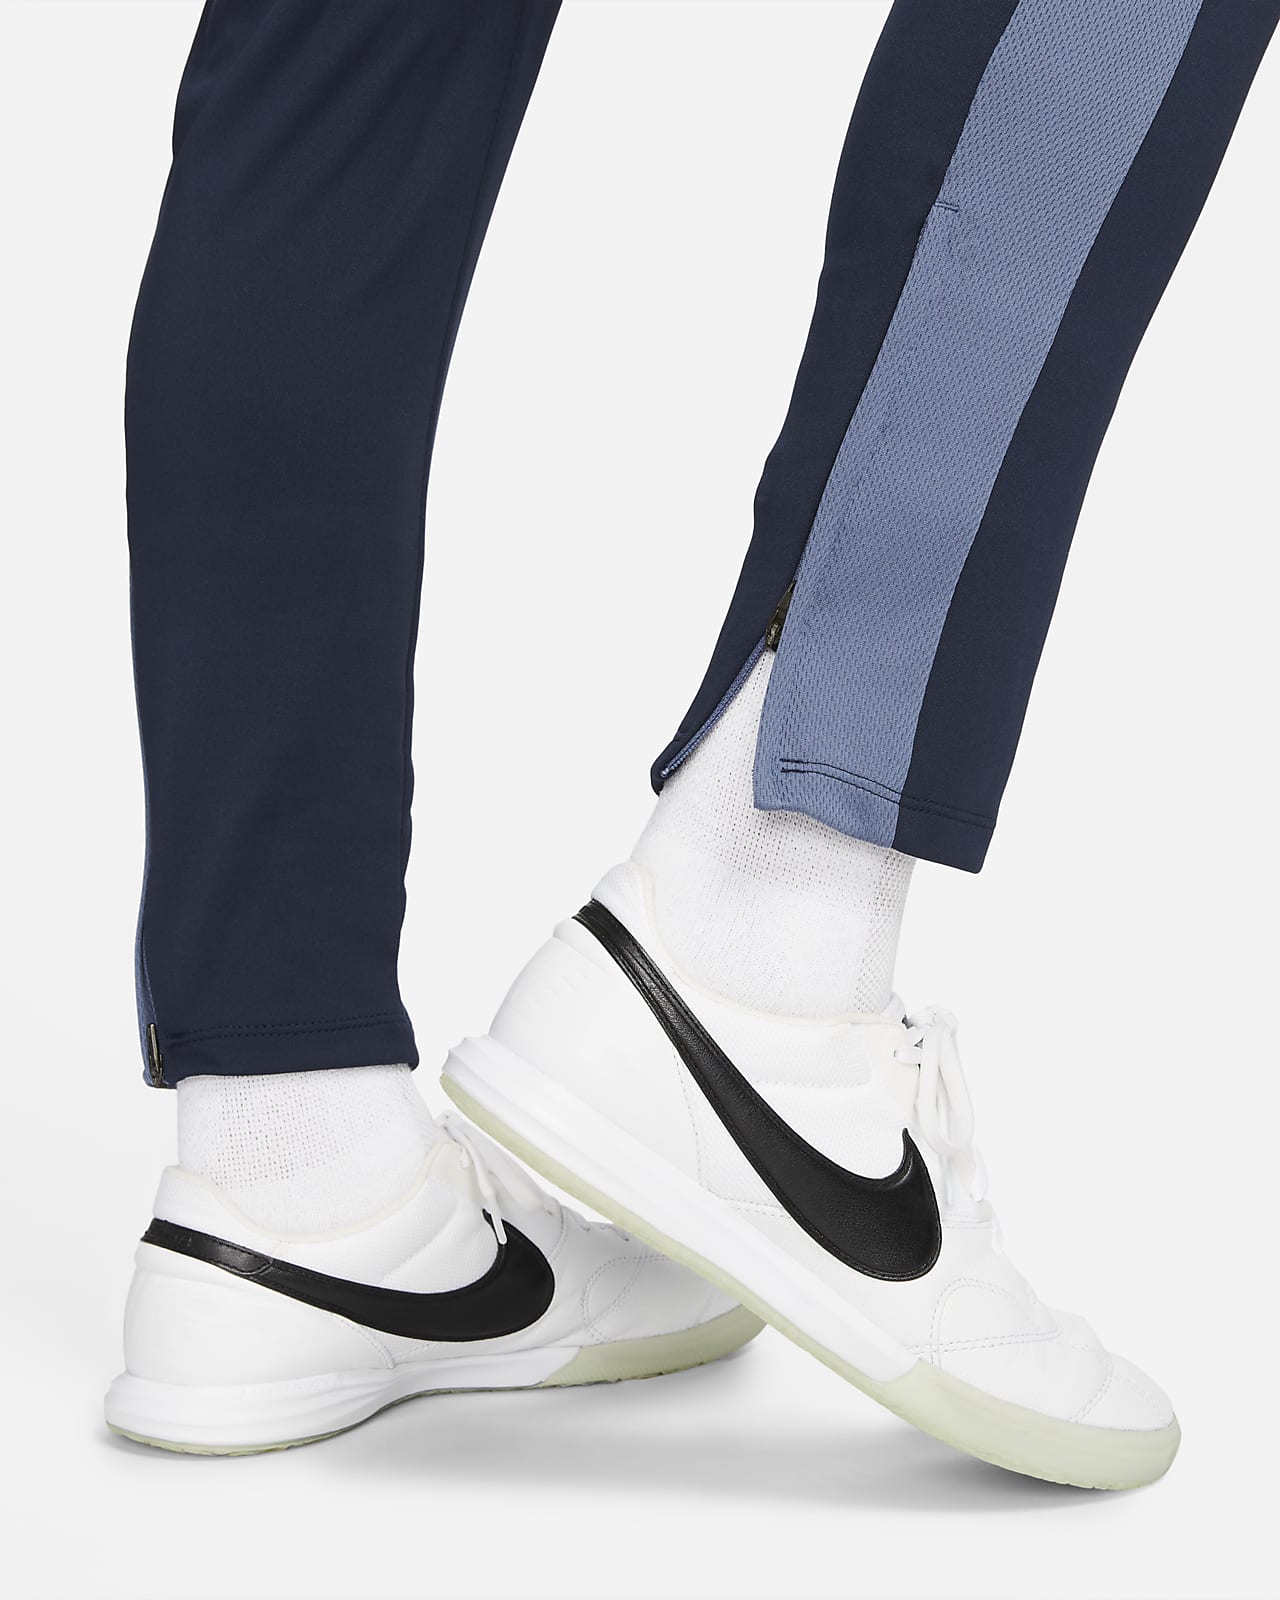 Nike Dri-Fit Athletic Pants Women's Black Used XL 452